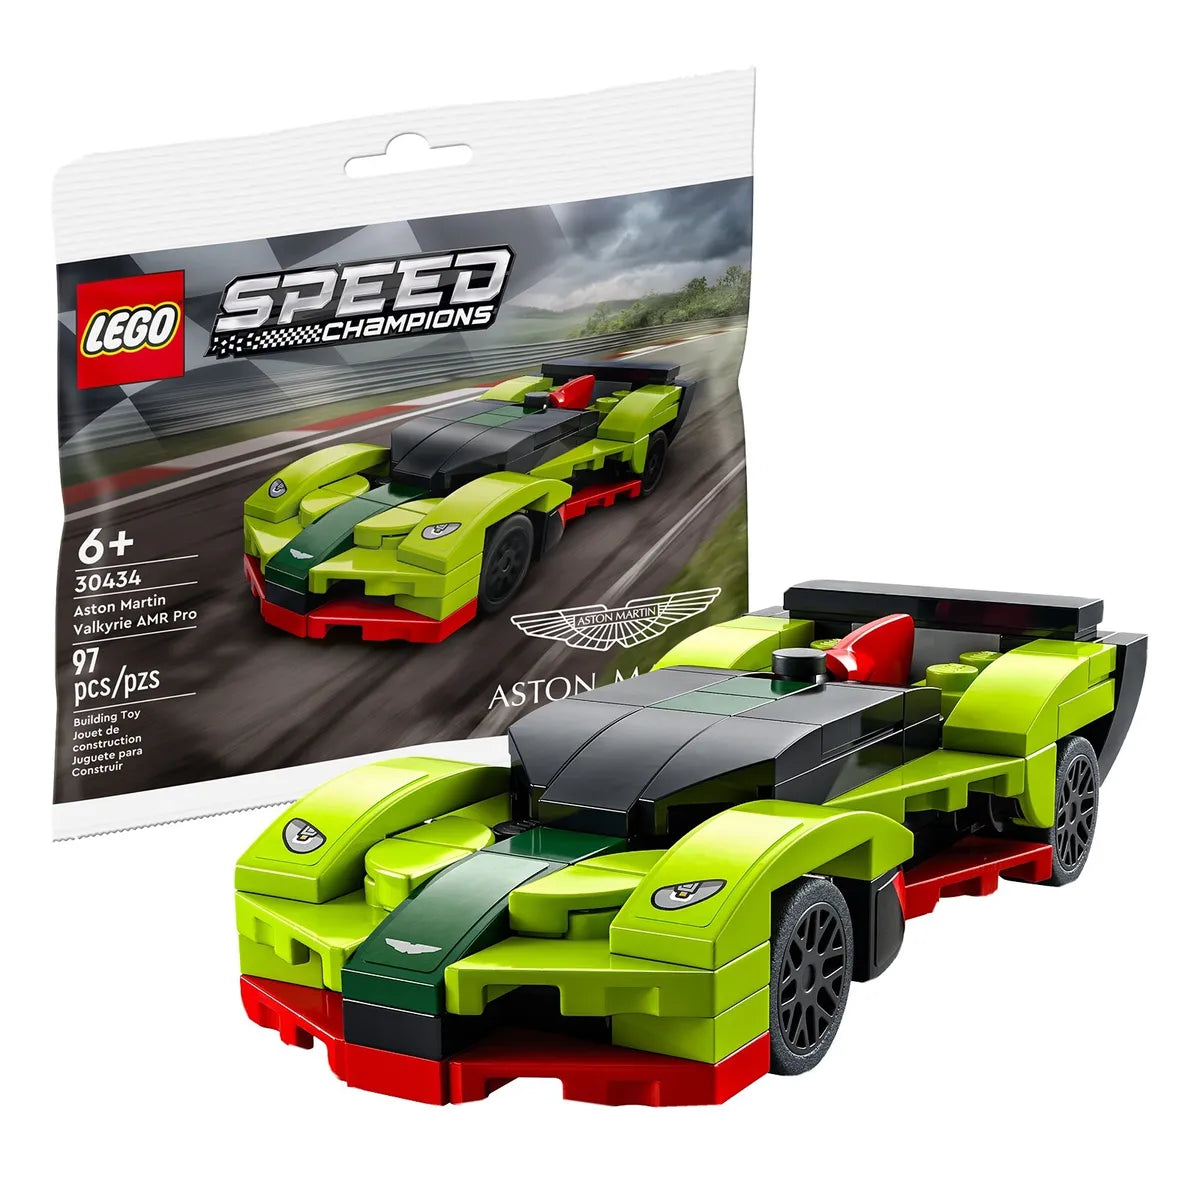 LEGO Speed Champions Aston Martin Valkyrie Polybag Set 30434